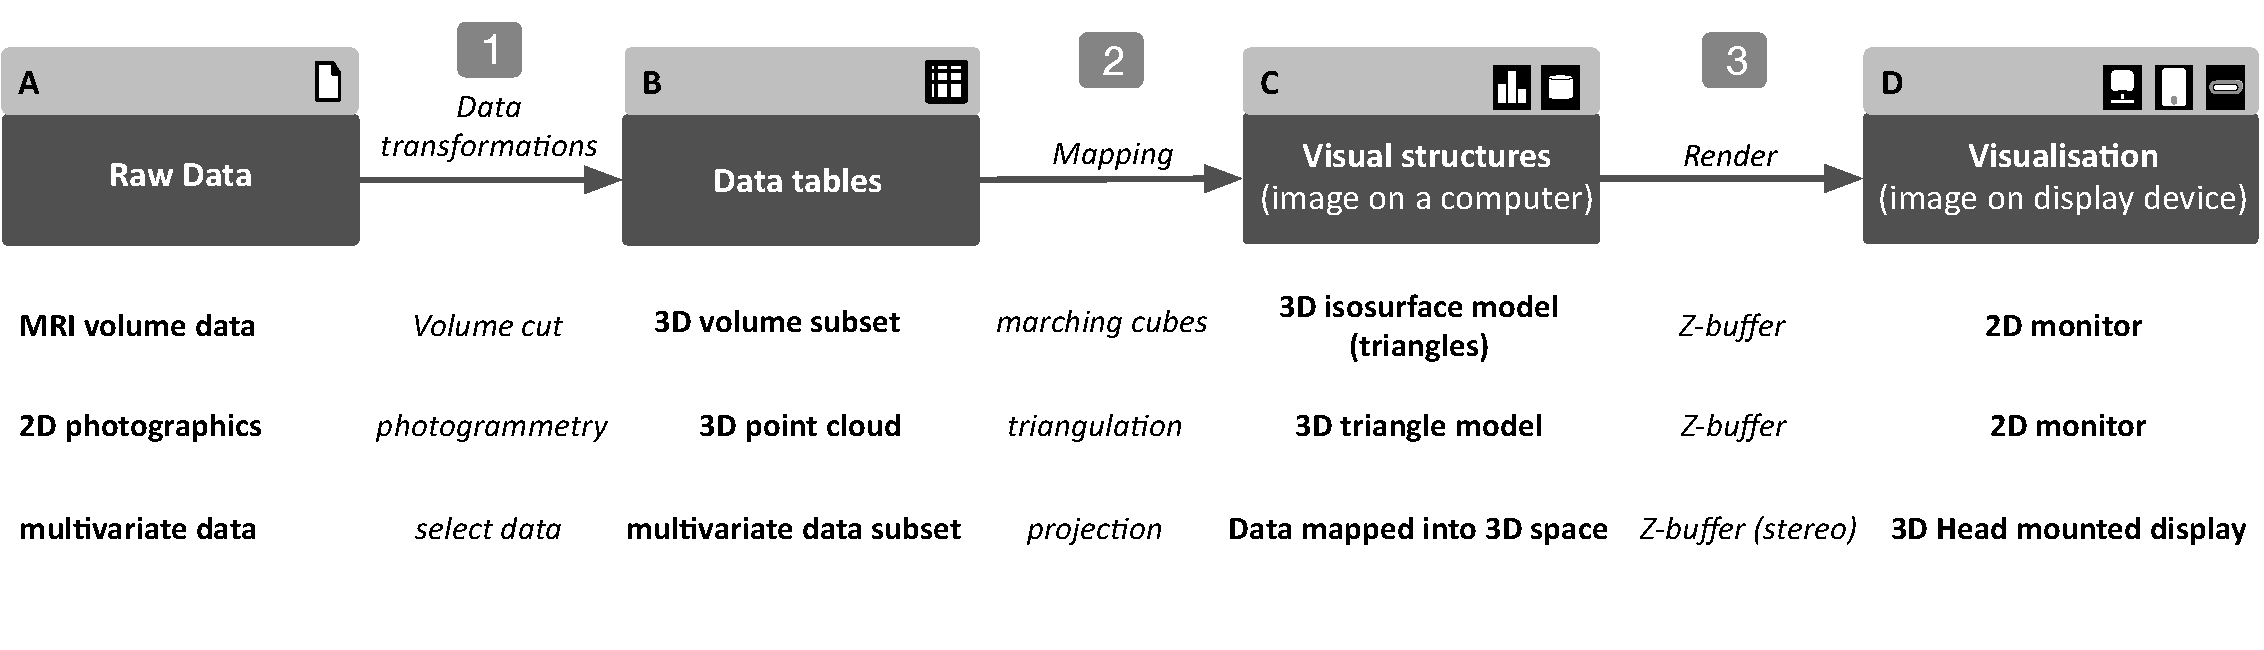 Visualisation Data Flow for 3D